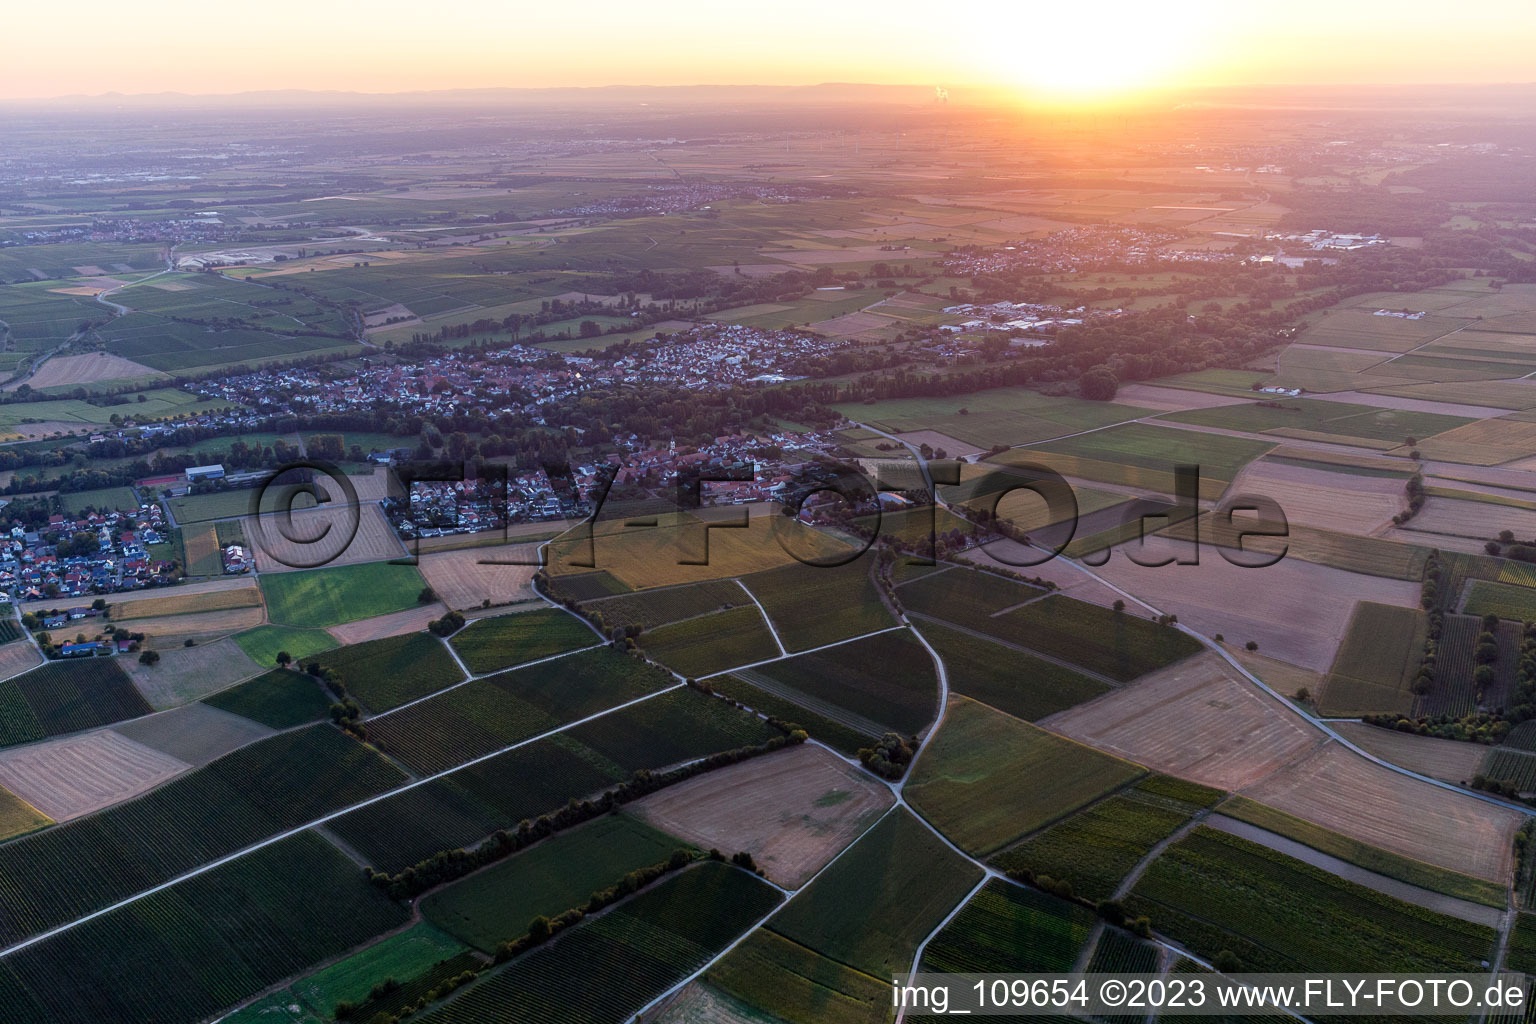 Drone image of District Billigheim in Billigheim-Ingenheim in the state Rhineland-Palatinate, Germany